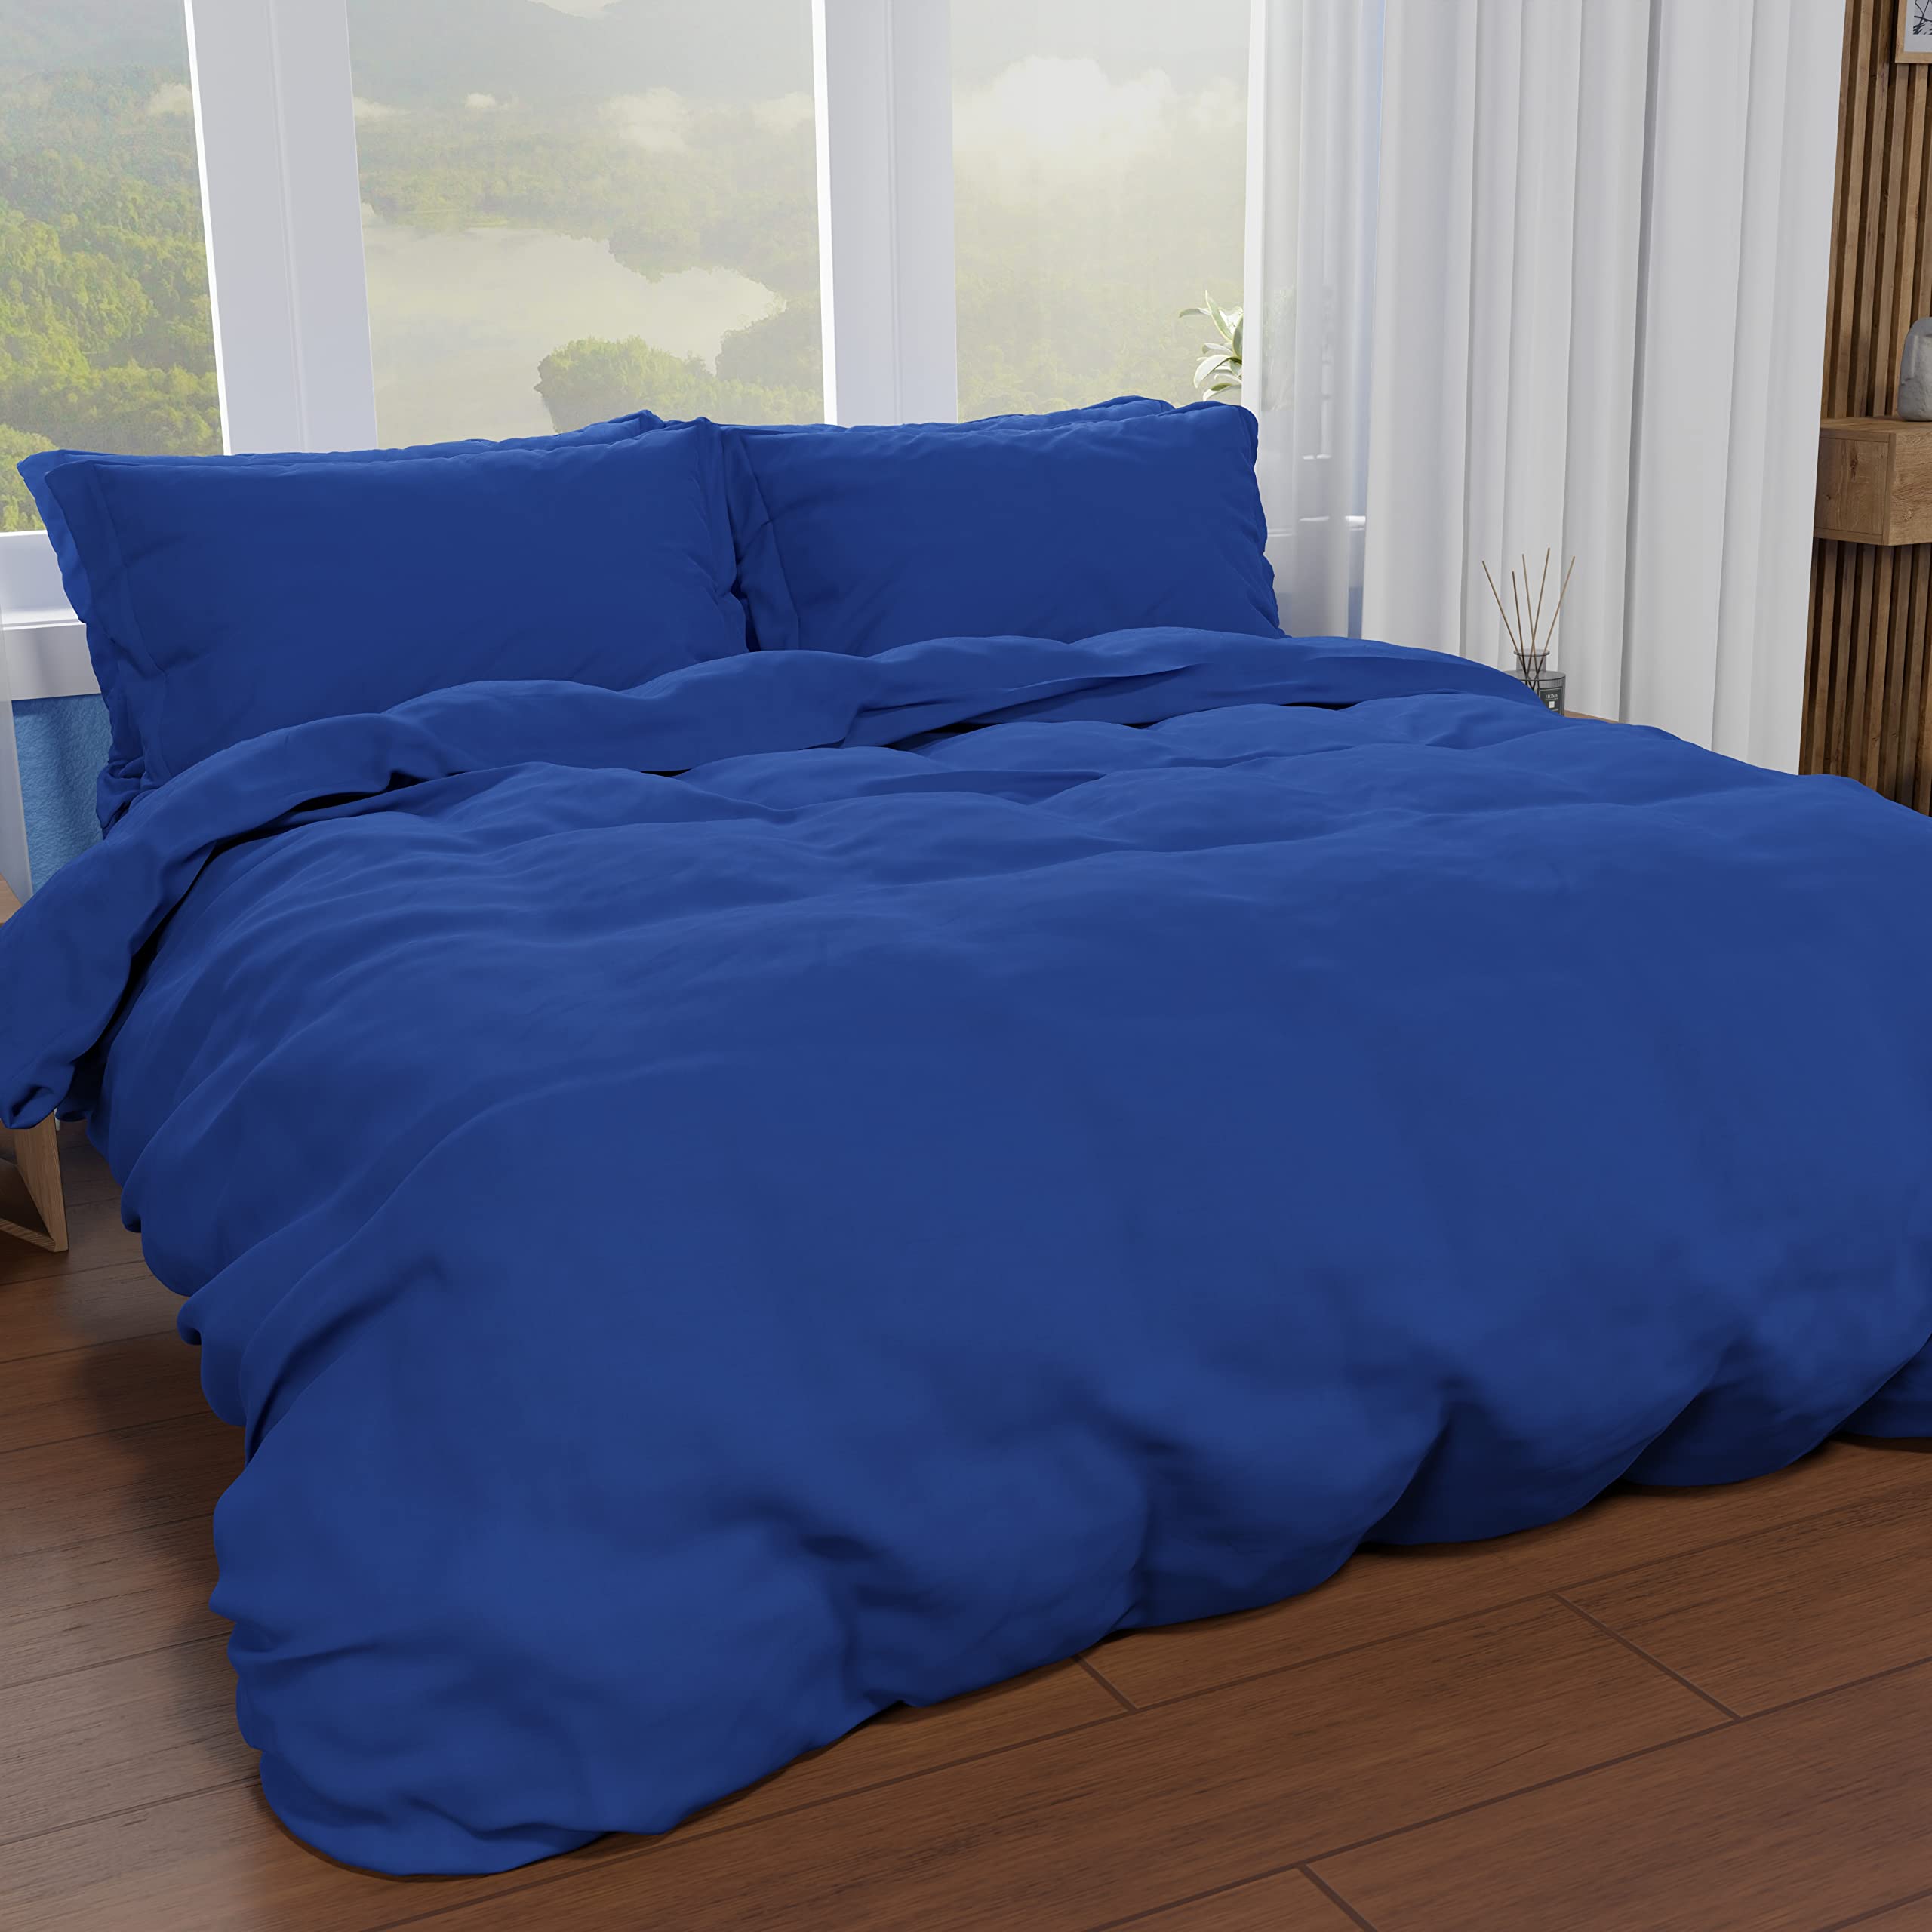 PETTI Artigiani Italiani - Bettbezug für Doppelbett, Bettbezug und Kissenbezüge aus Mikrofaser, einfarbig, elektroblau, 100% Made in Italy